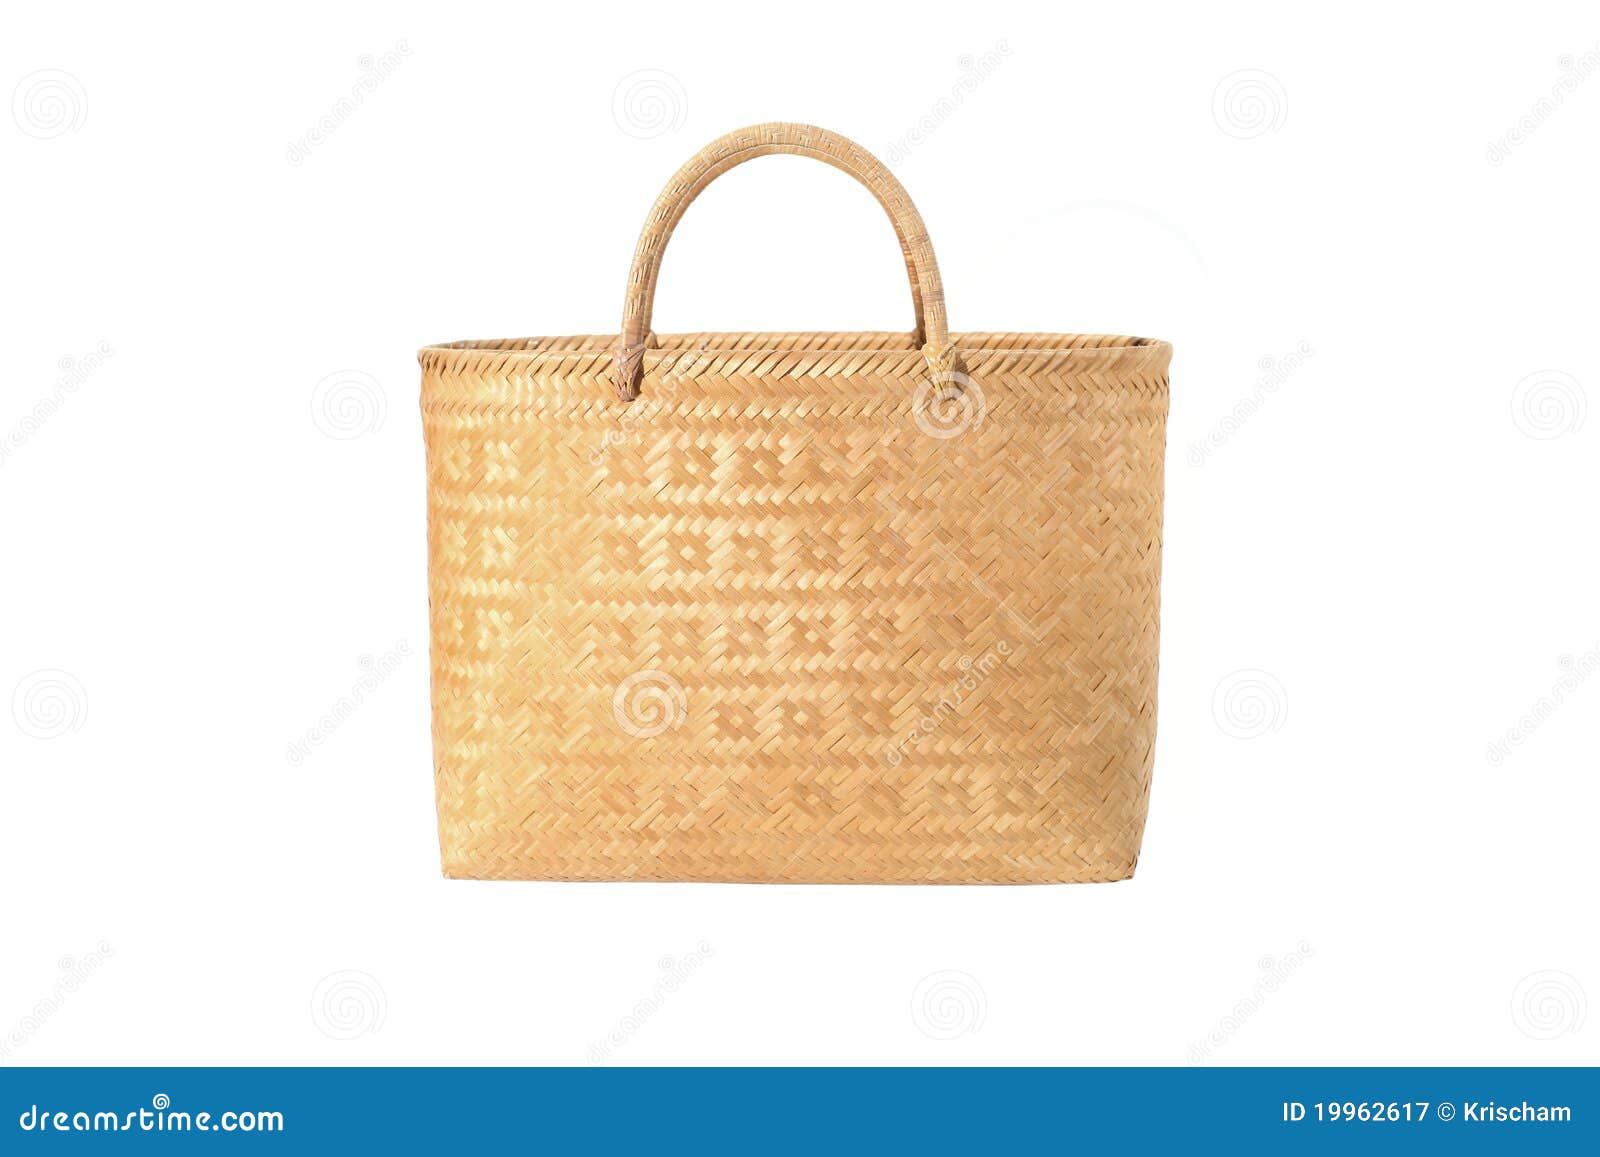 Bamboo handbag isolated stock image. Image of artisan - 19962617